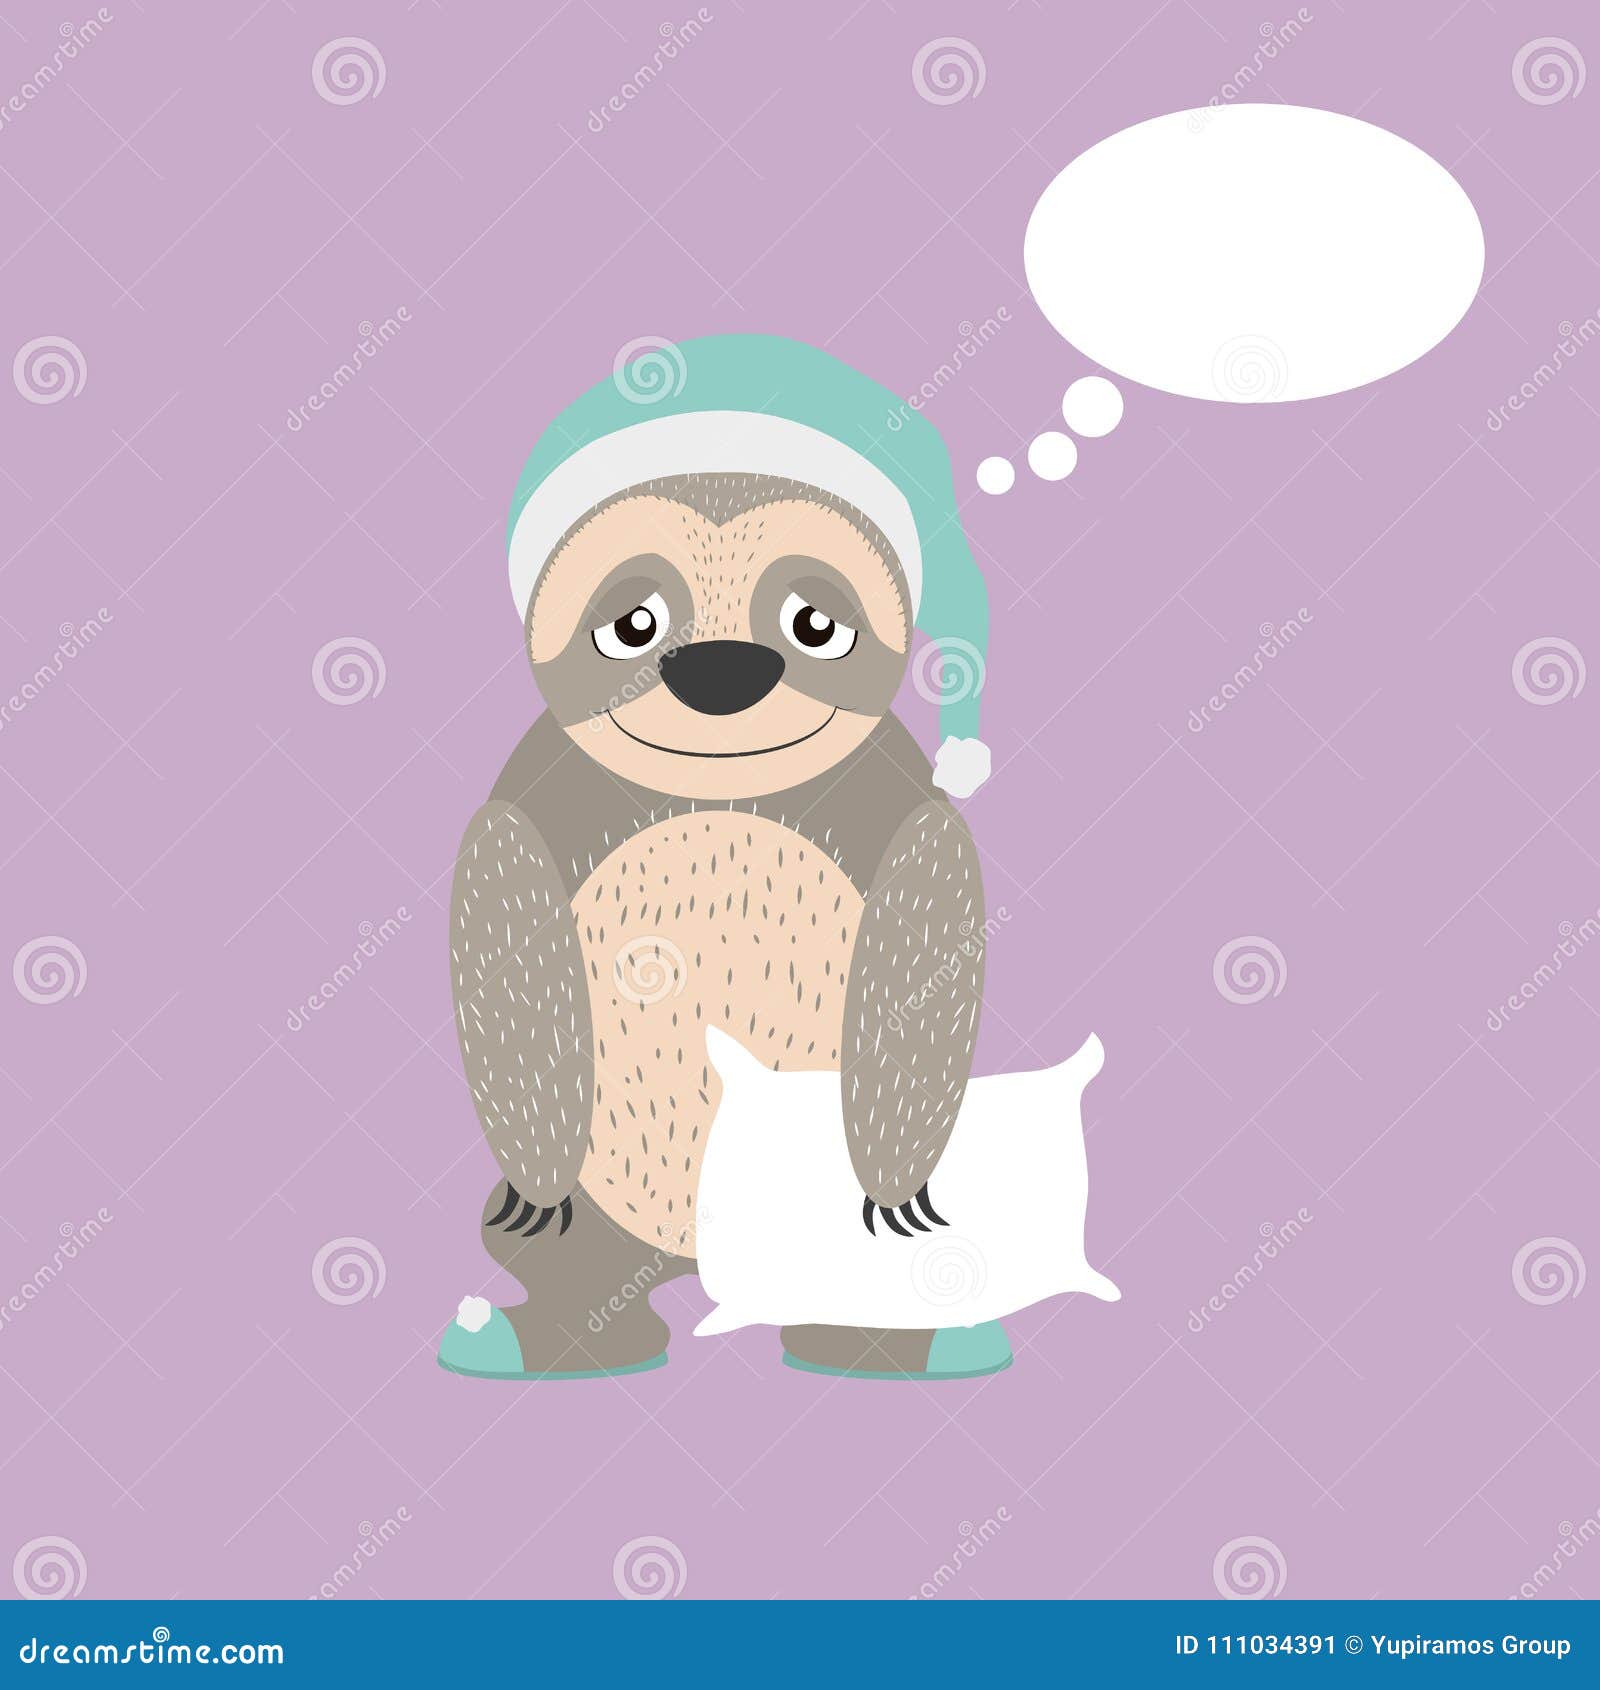 sloth with pillow and pijama cartoon